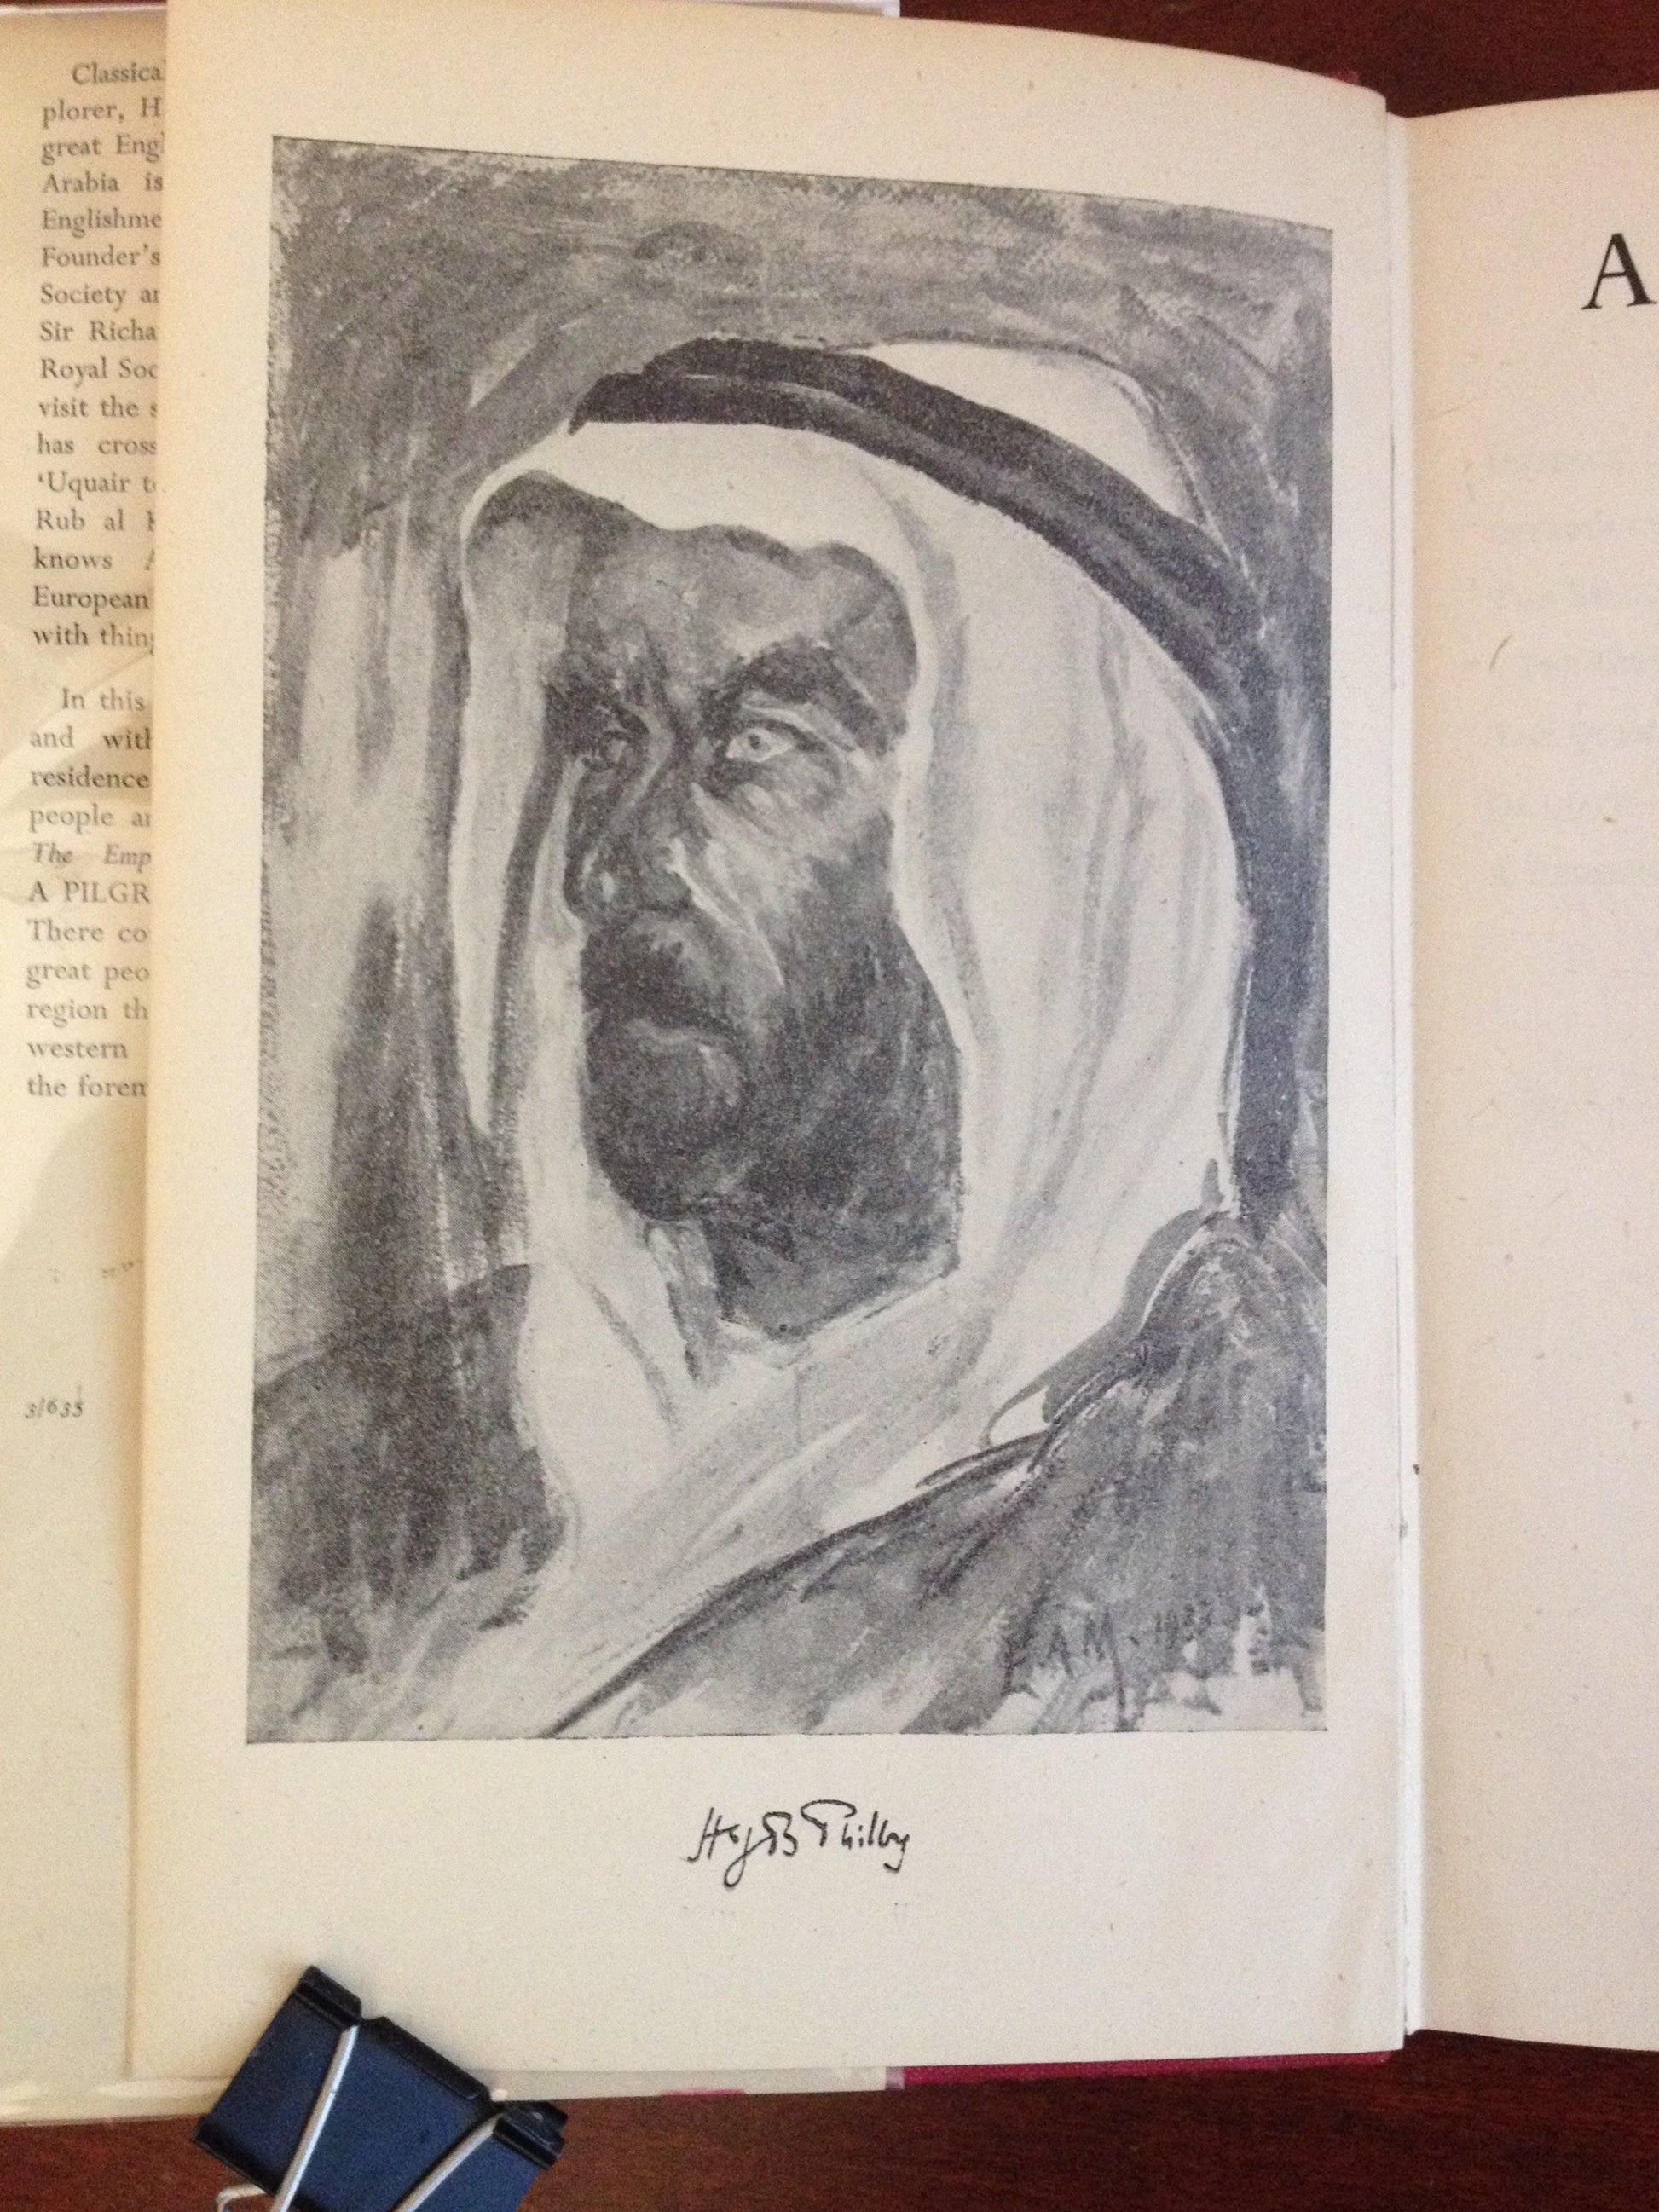 A PILGRIM IN ARABIA   BY: H. STJ. B PHILBY BooksCardsNBikes